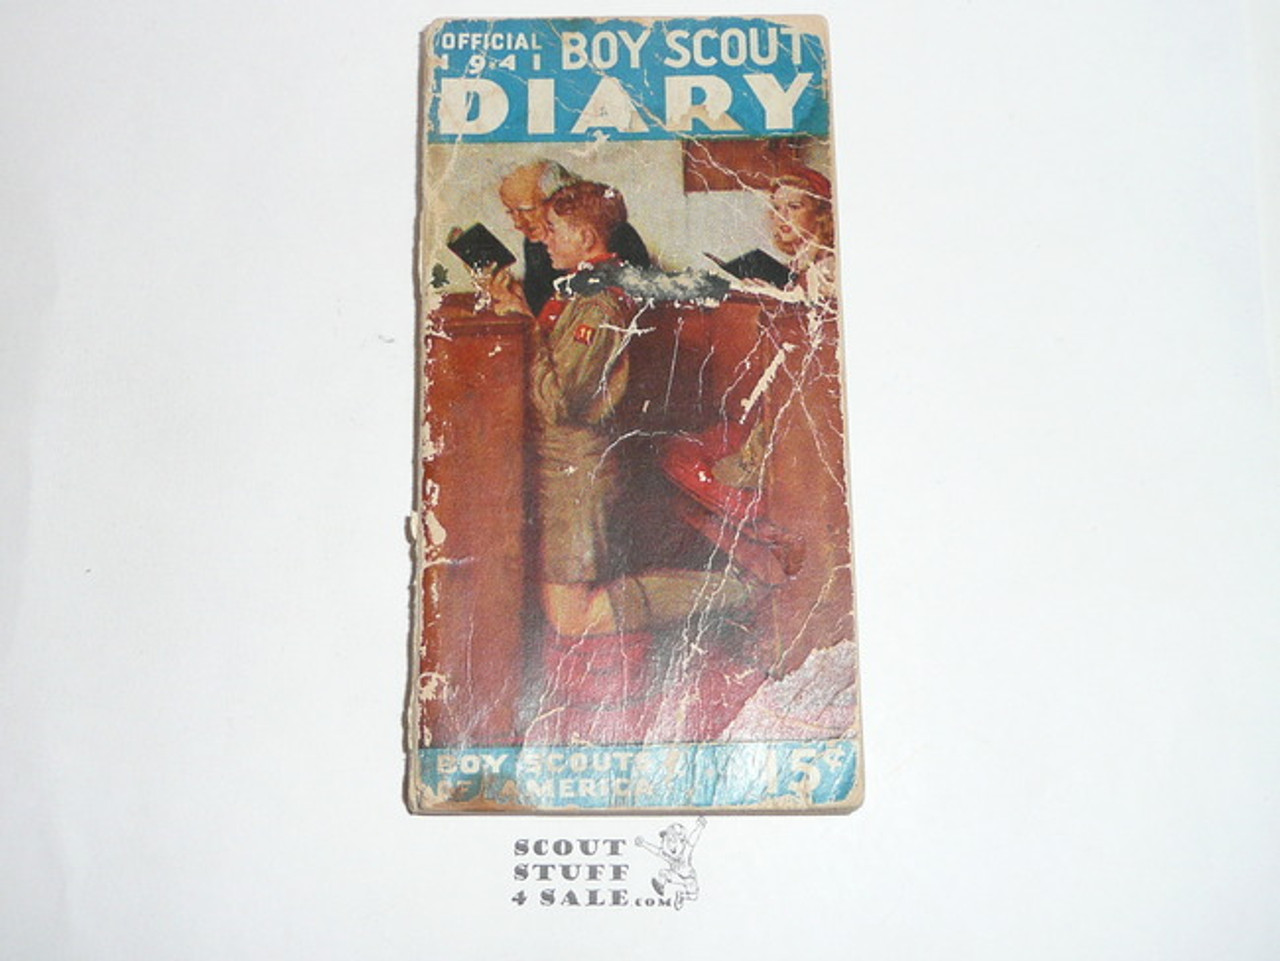 1941 Boy Scout Diary, some wear